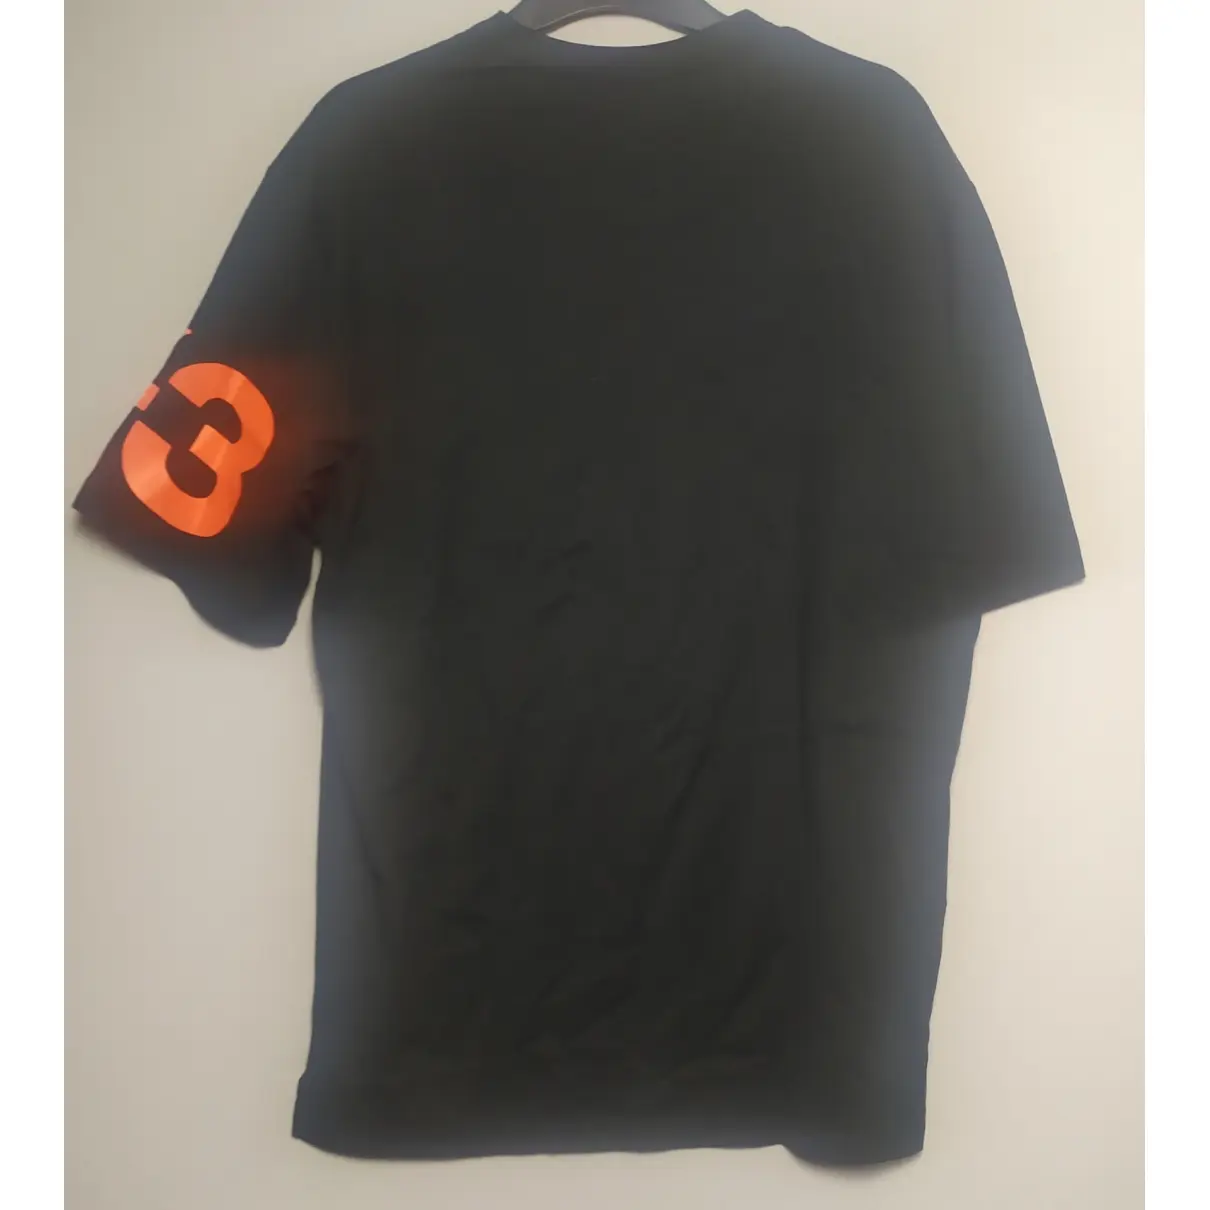 Buy Y-3 Black Cotton T-shirt online